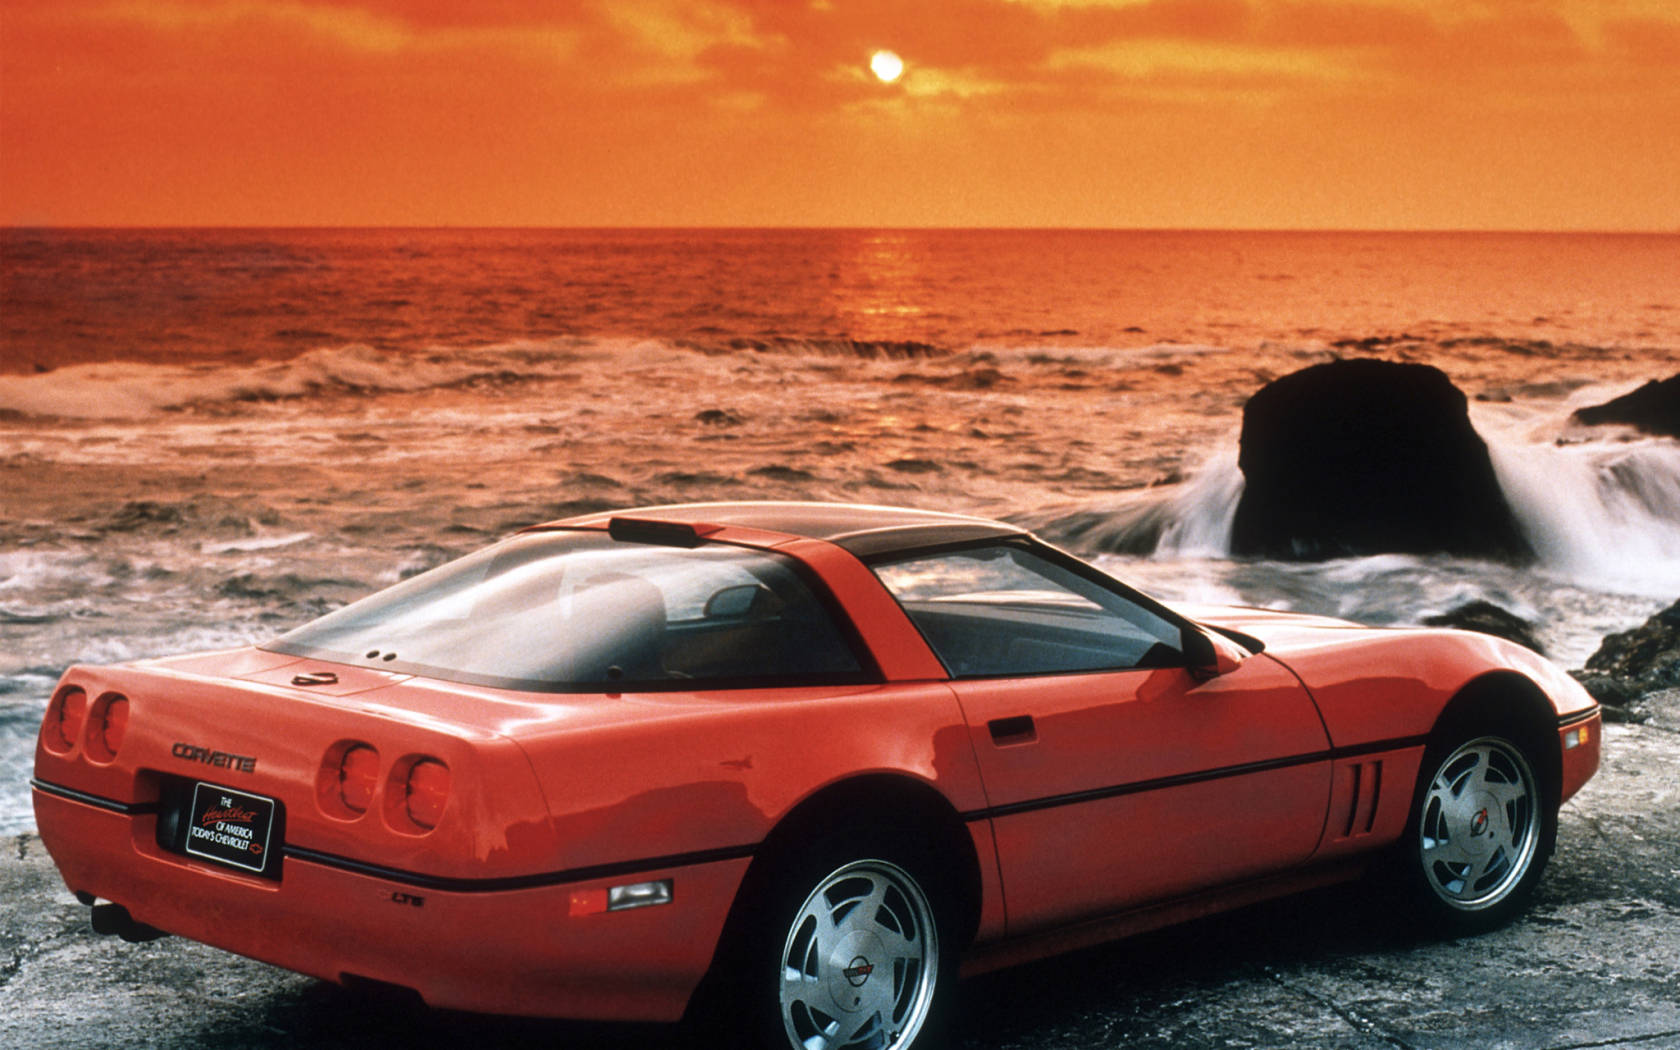 C4 Corvette And Crashing Waves Background